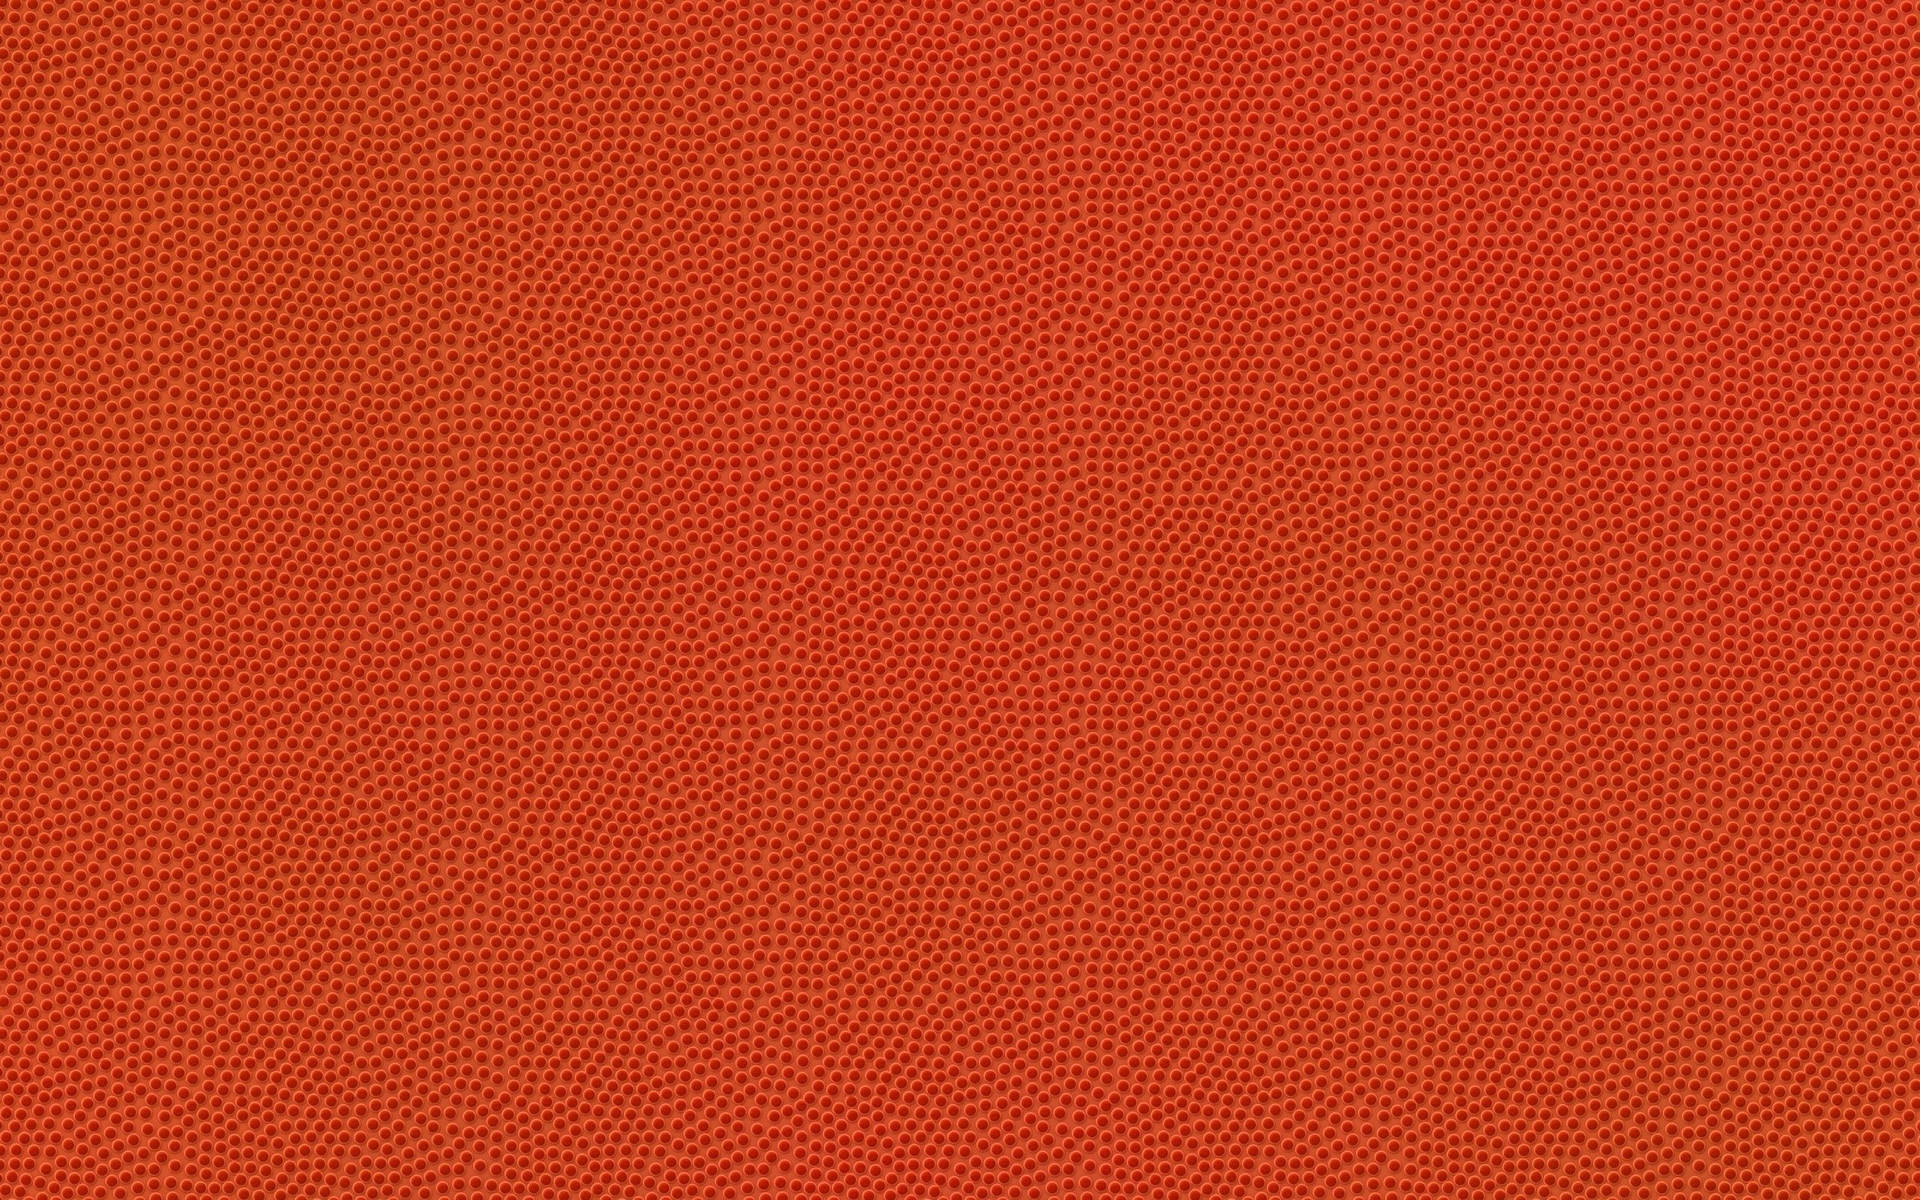 Orange 2560X1600 Wallpaper and Background Image